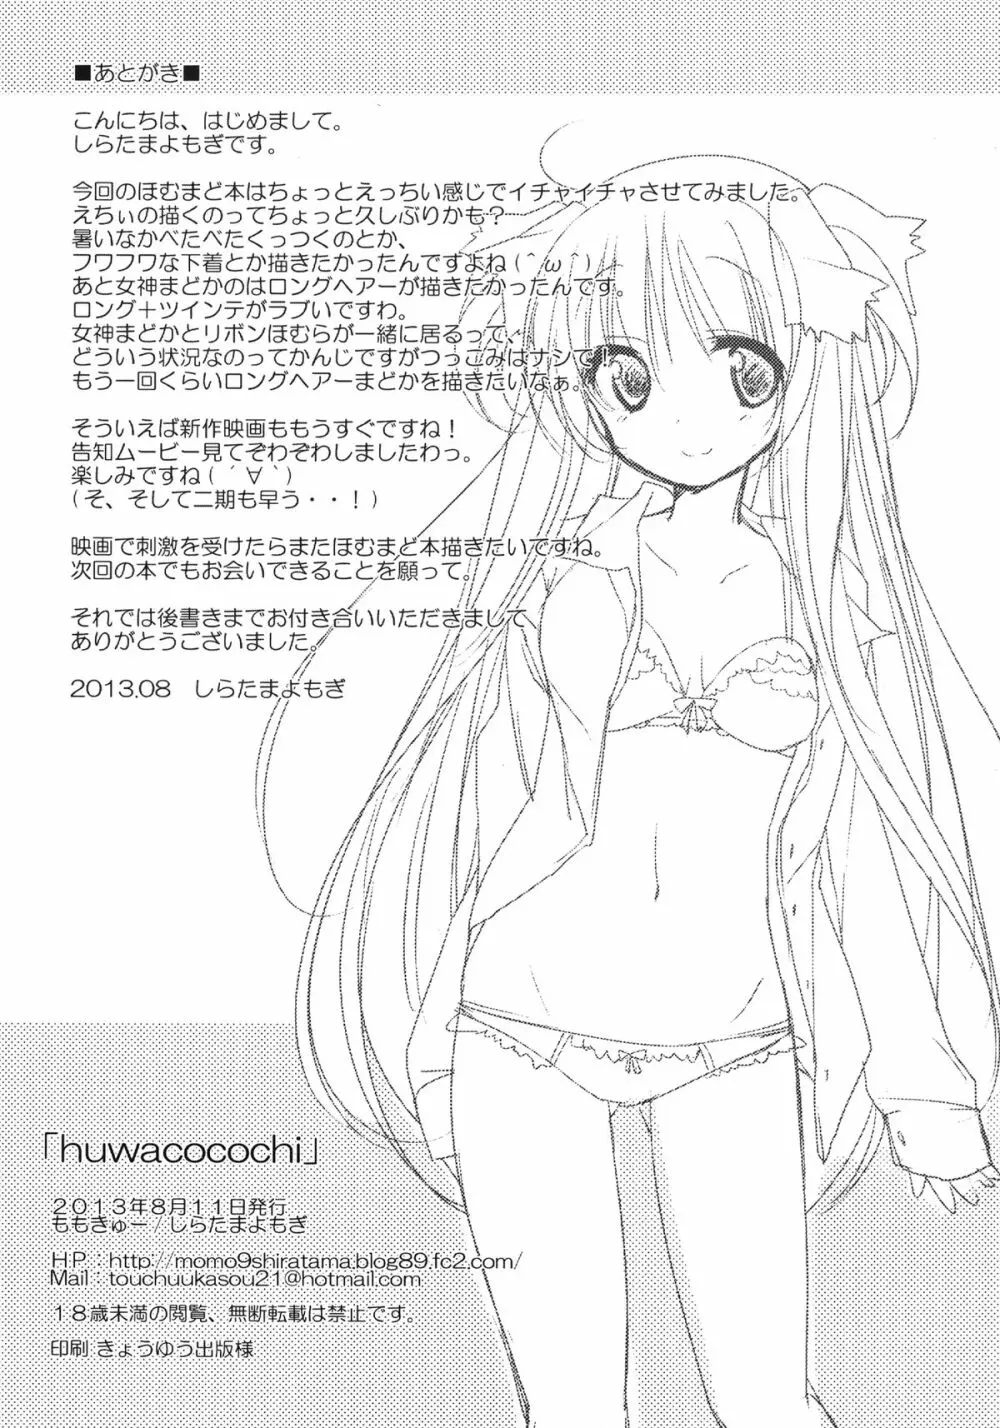 huwacocochi - page22